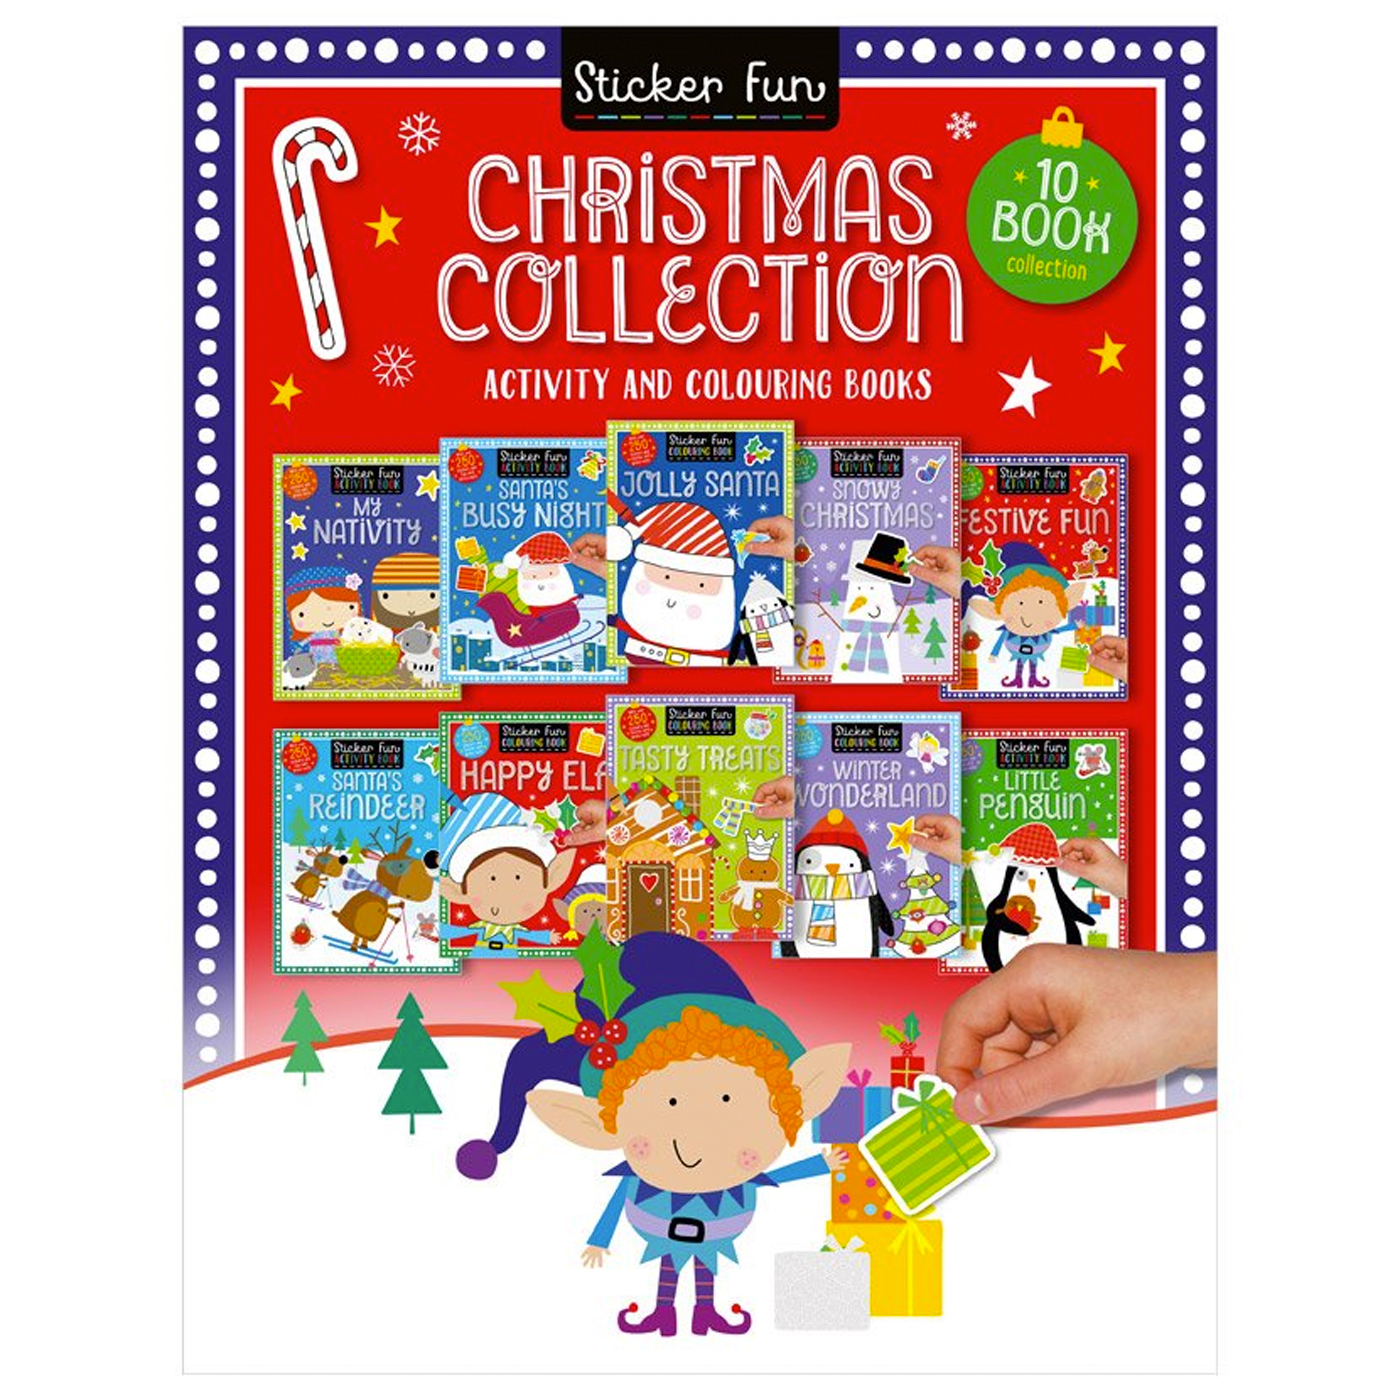  Christmas Collection Sticker Fun